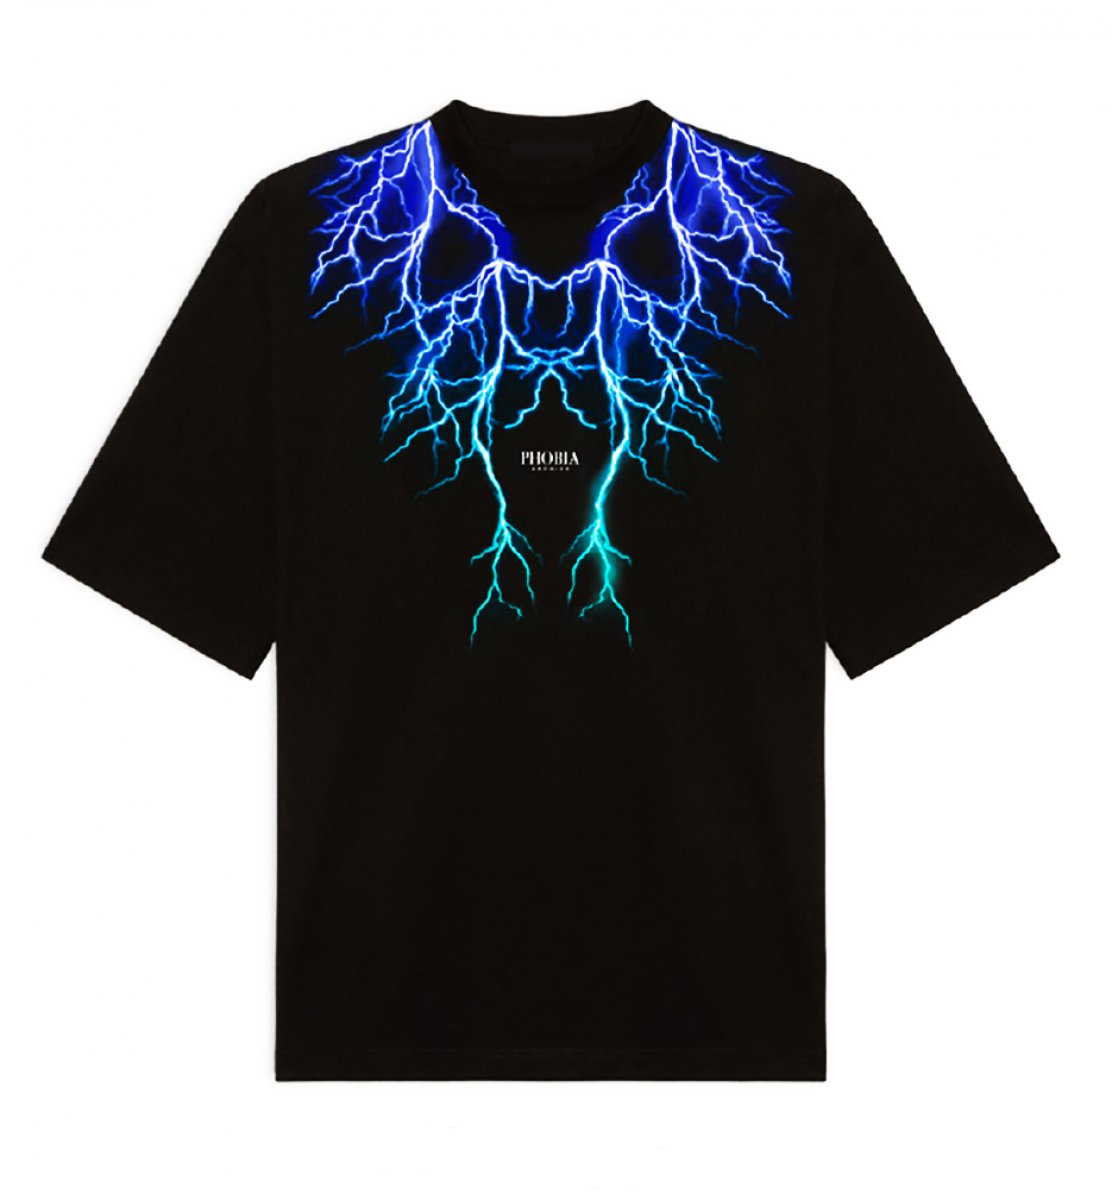 Phobia Archive T-Shirt Lightning BLACK Blue Light Blue new 2022 Phobia Archive Originale